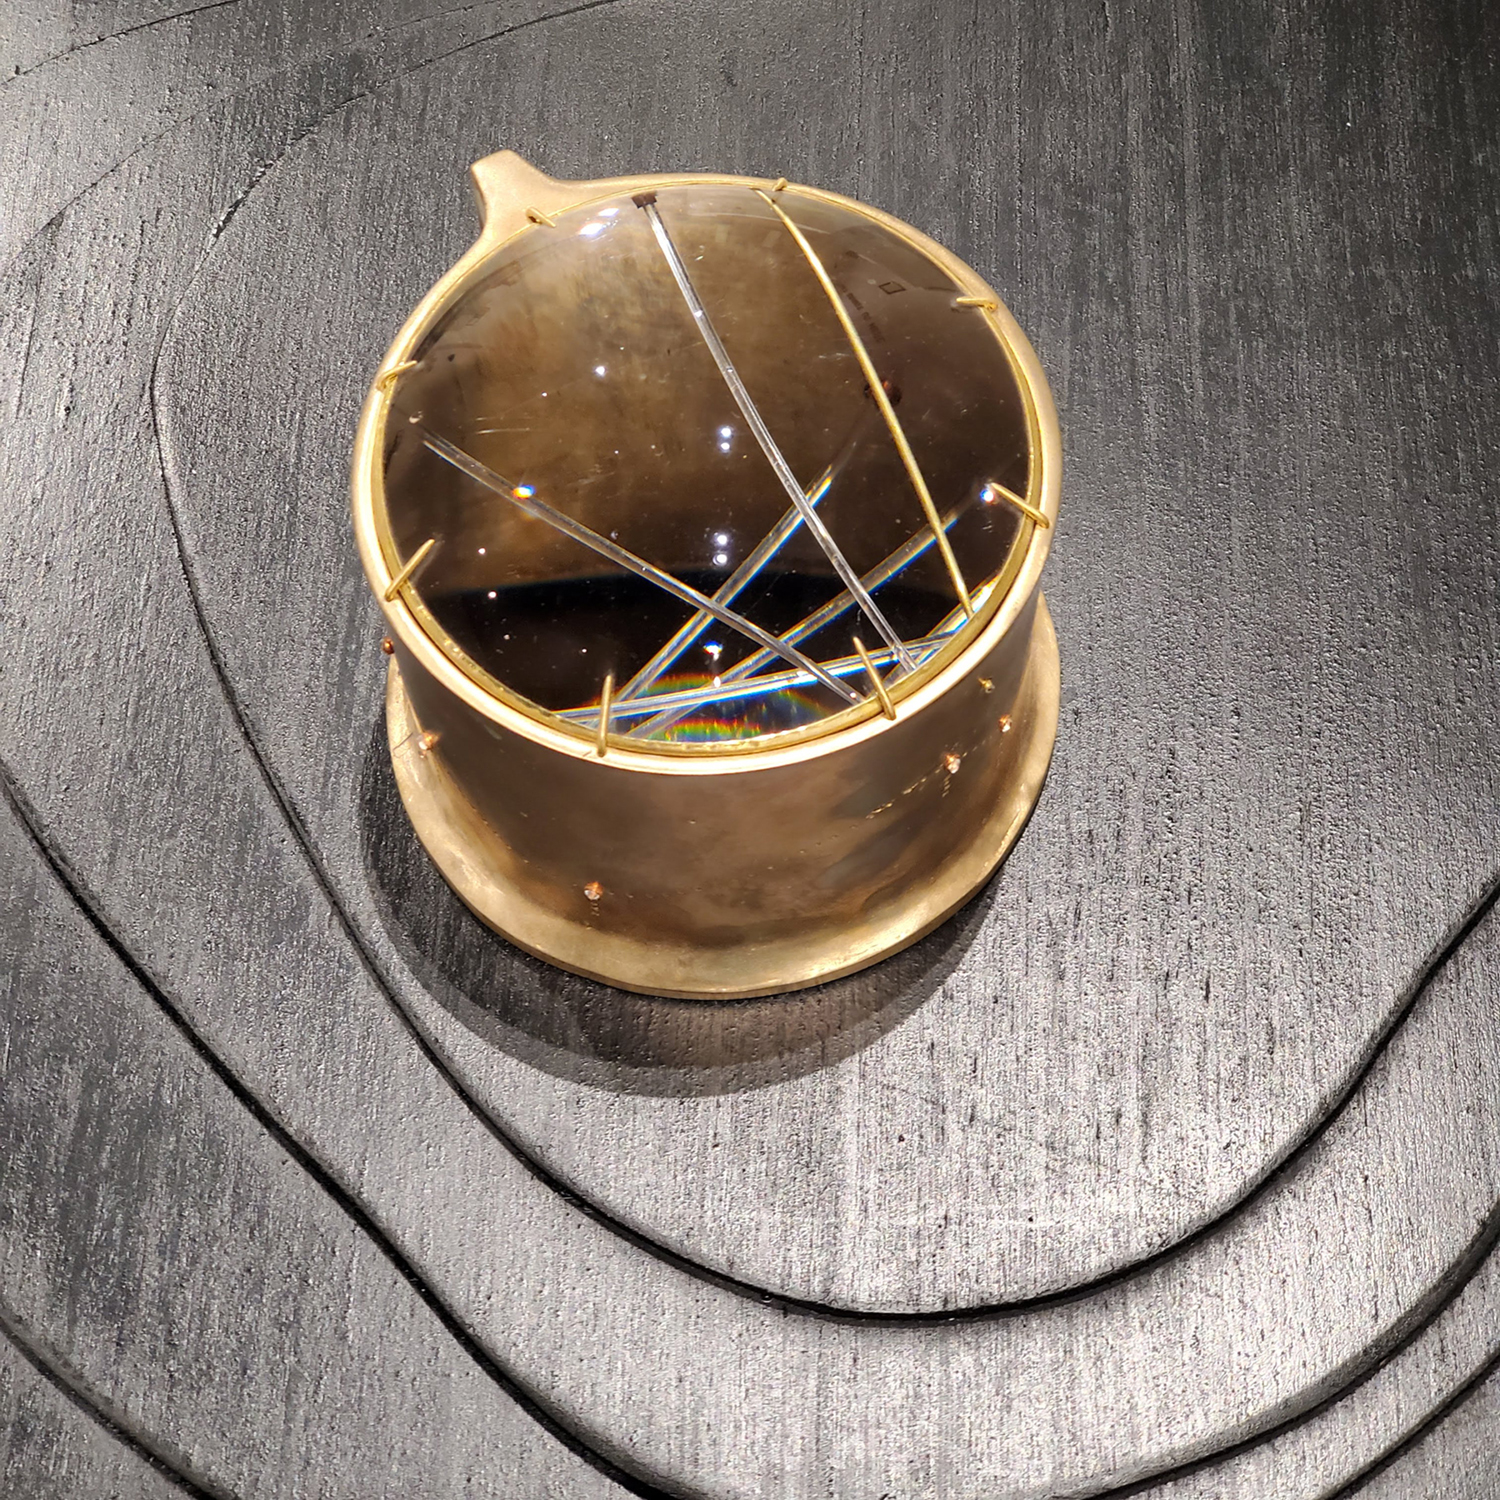 Cast bronze, reclaimed lens, fiber optic filament, 5.75 x 4.75 x 5.25", image courtesy of Christen Booth